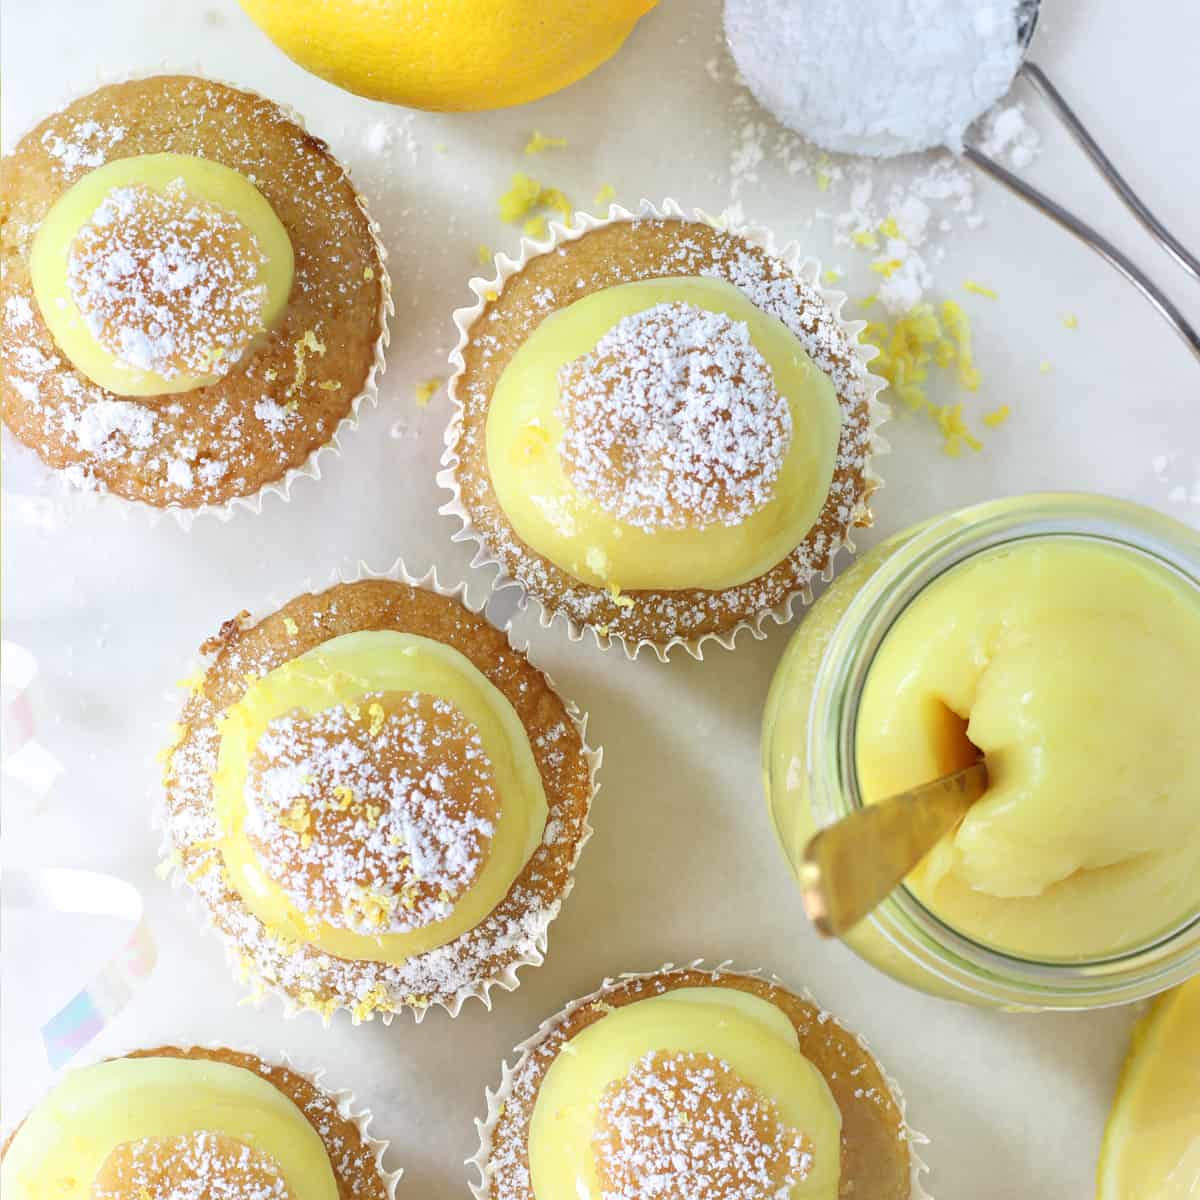 Healthy Lemon Cupcakes